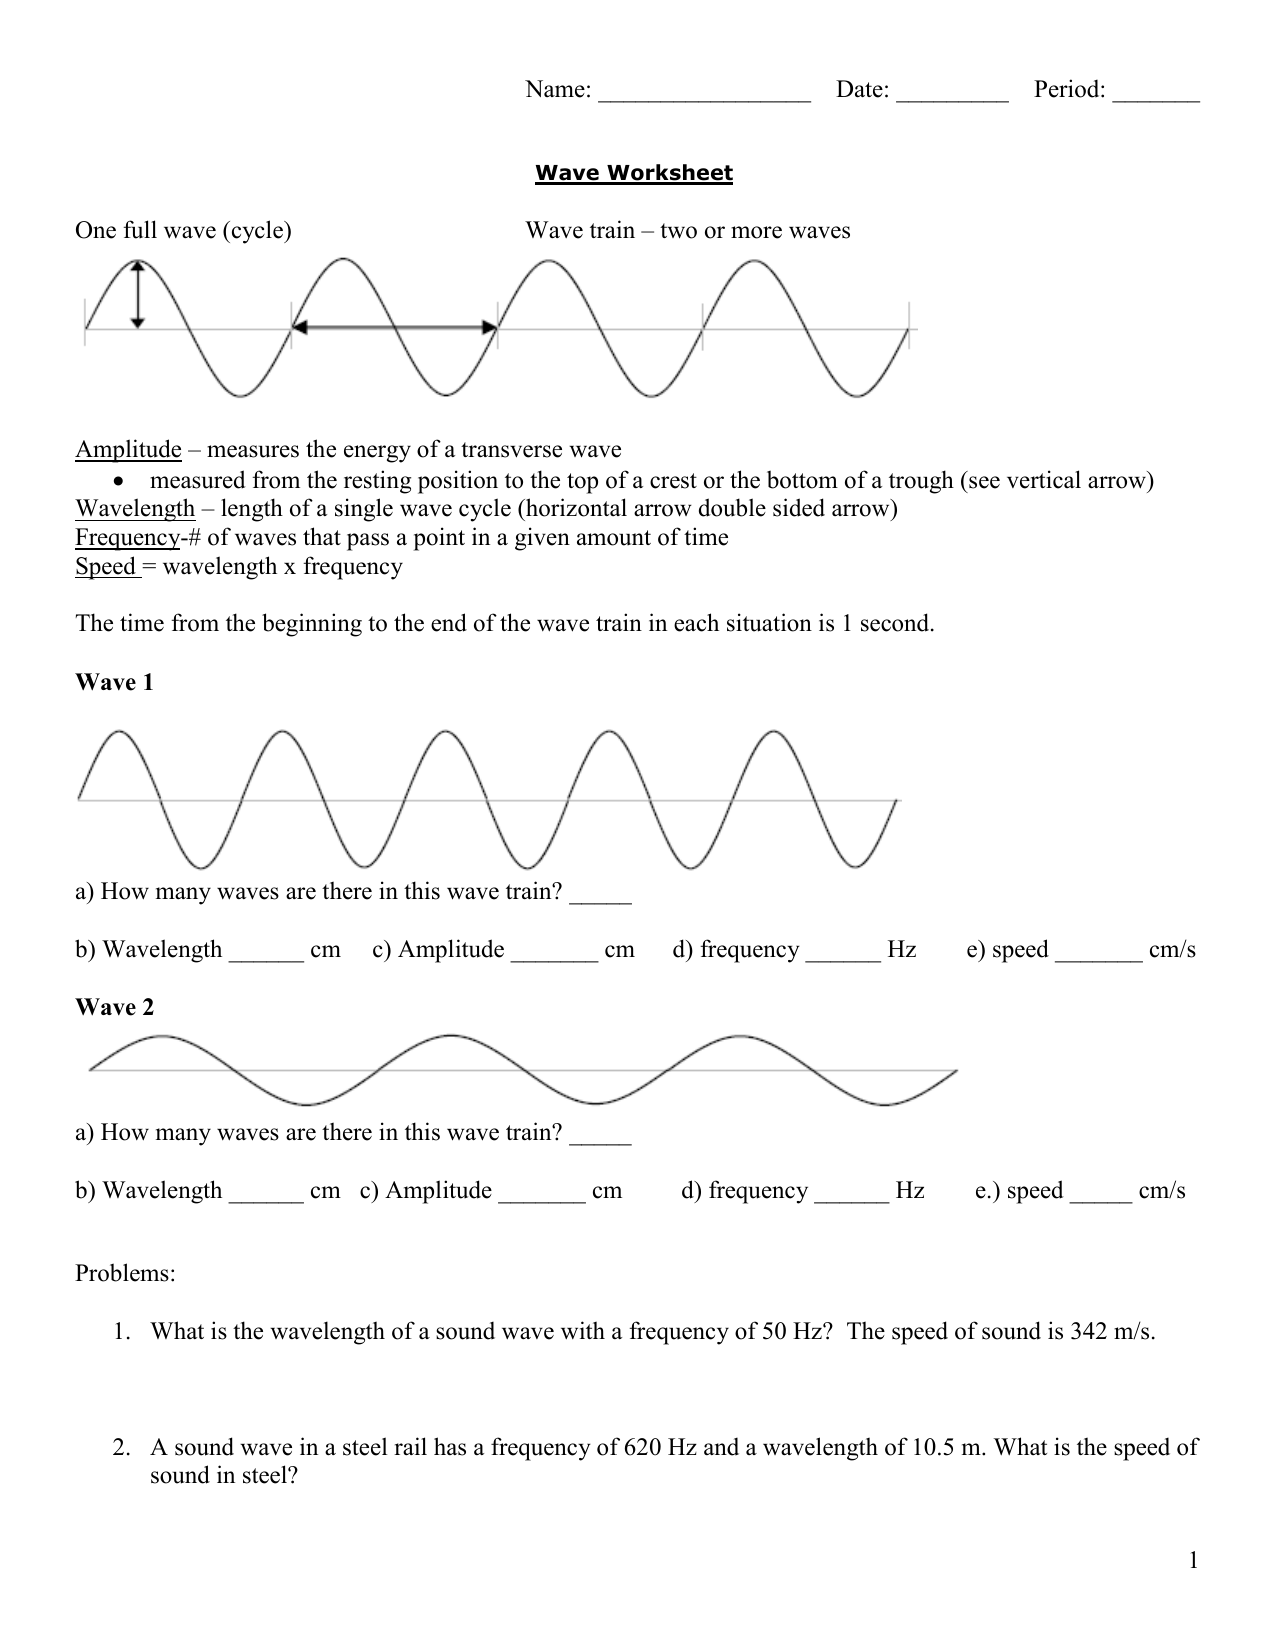 Wave Worksheet Throughout Wave Worksheet Answer Key